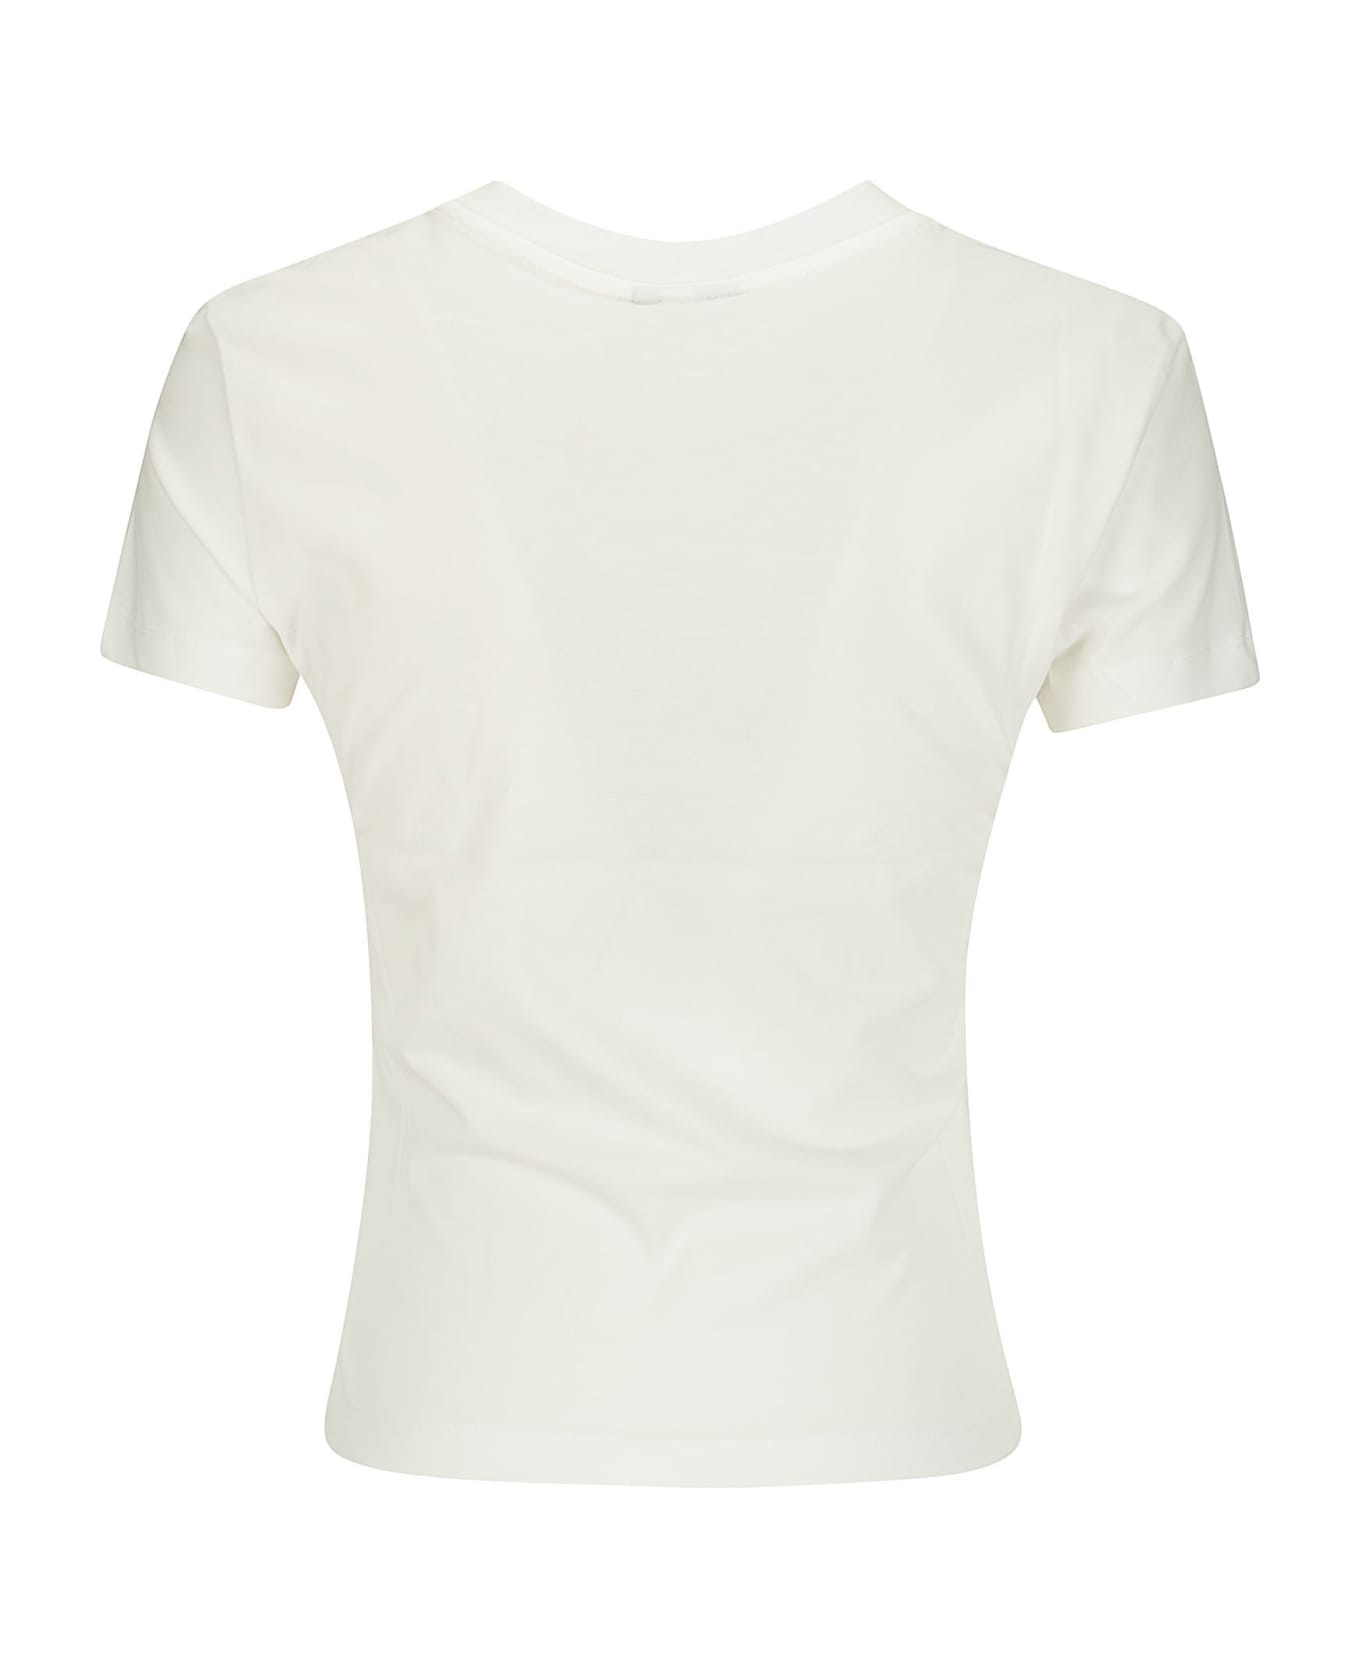 Vaquera Women's Titty T-shirt - WHITE Tシャツ